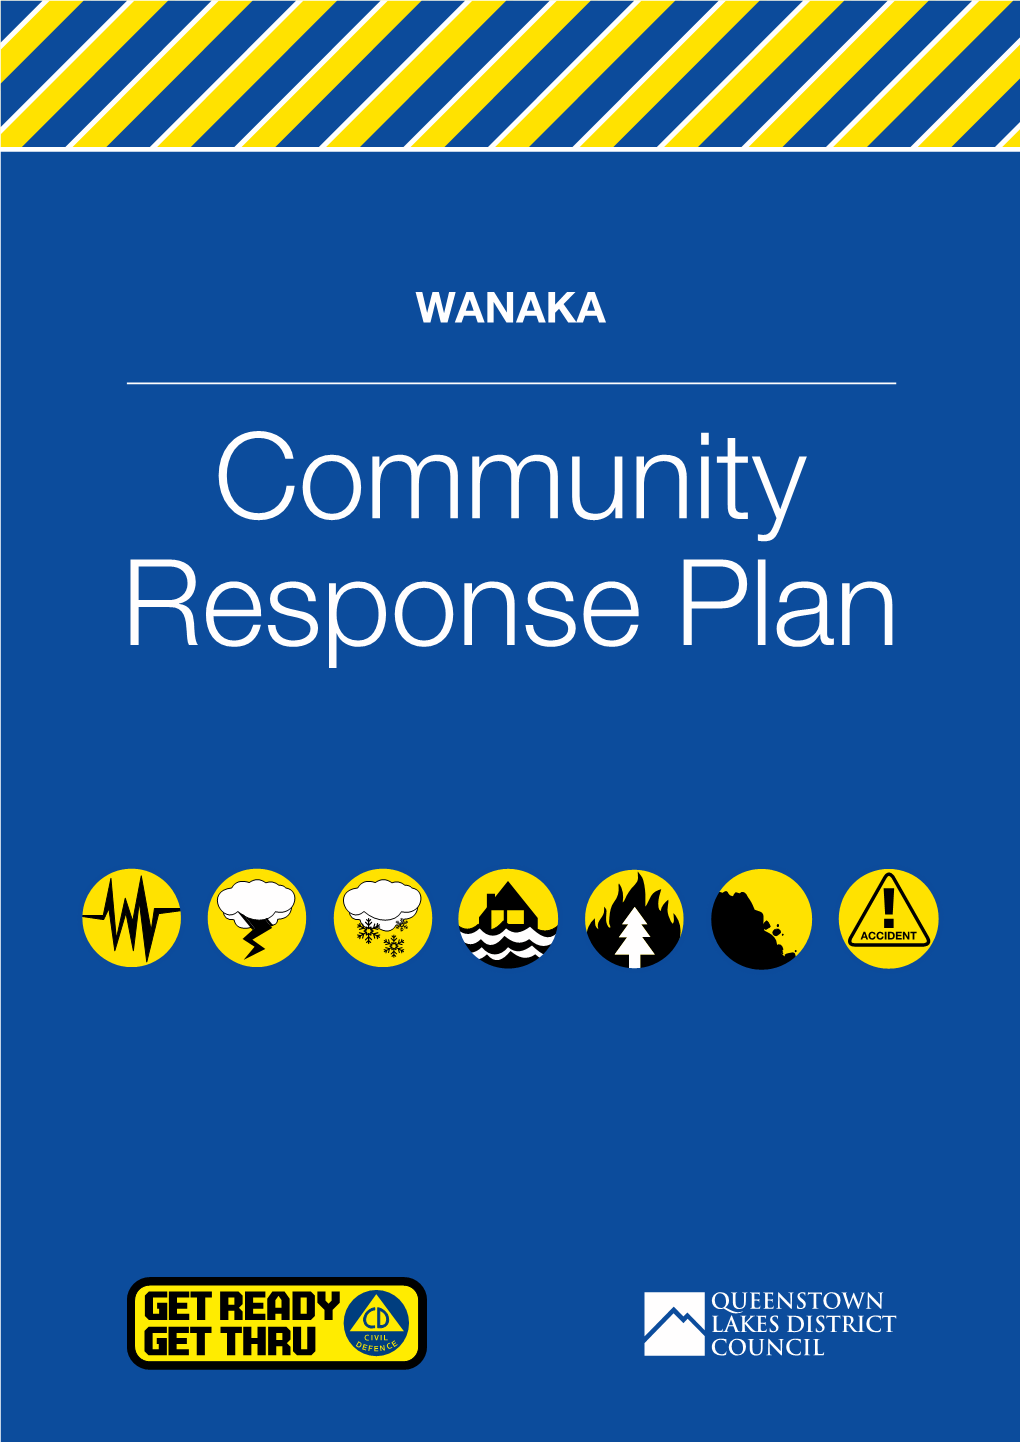 WANAKA Community Response Plan Contents